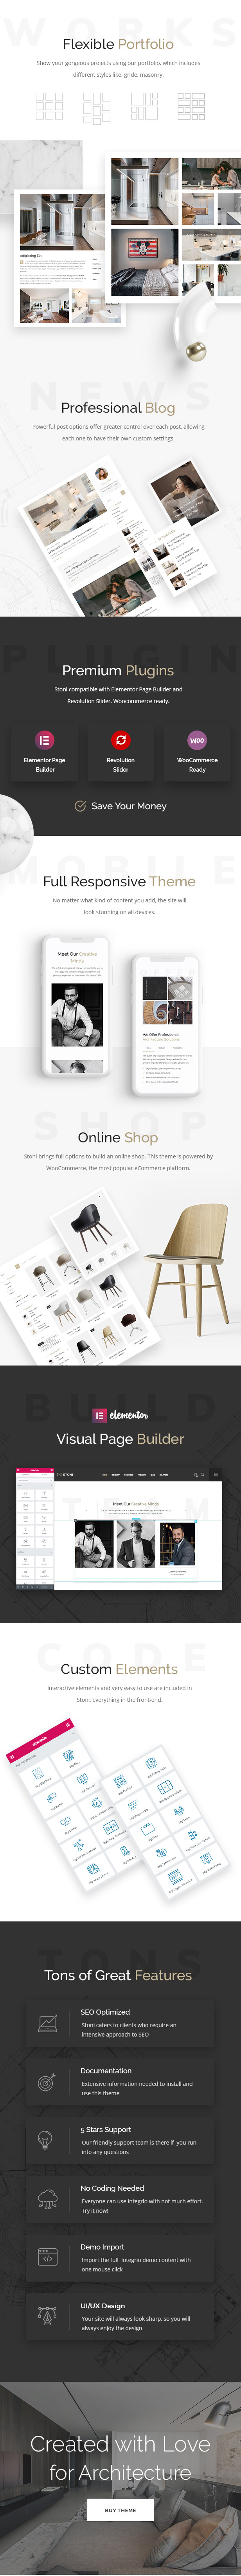 Stoni - Architecture & Interior Design Agency WordPress Theme - 3